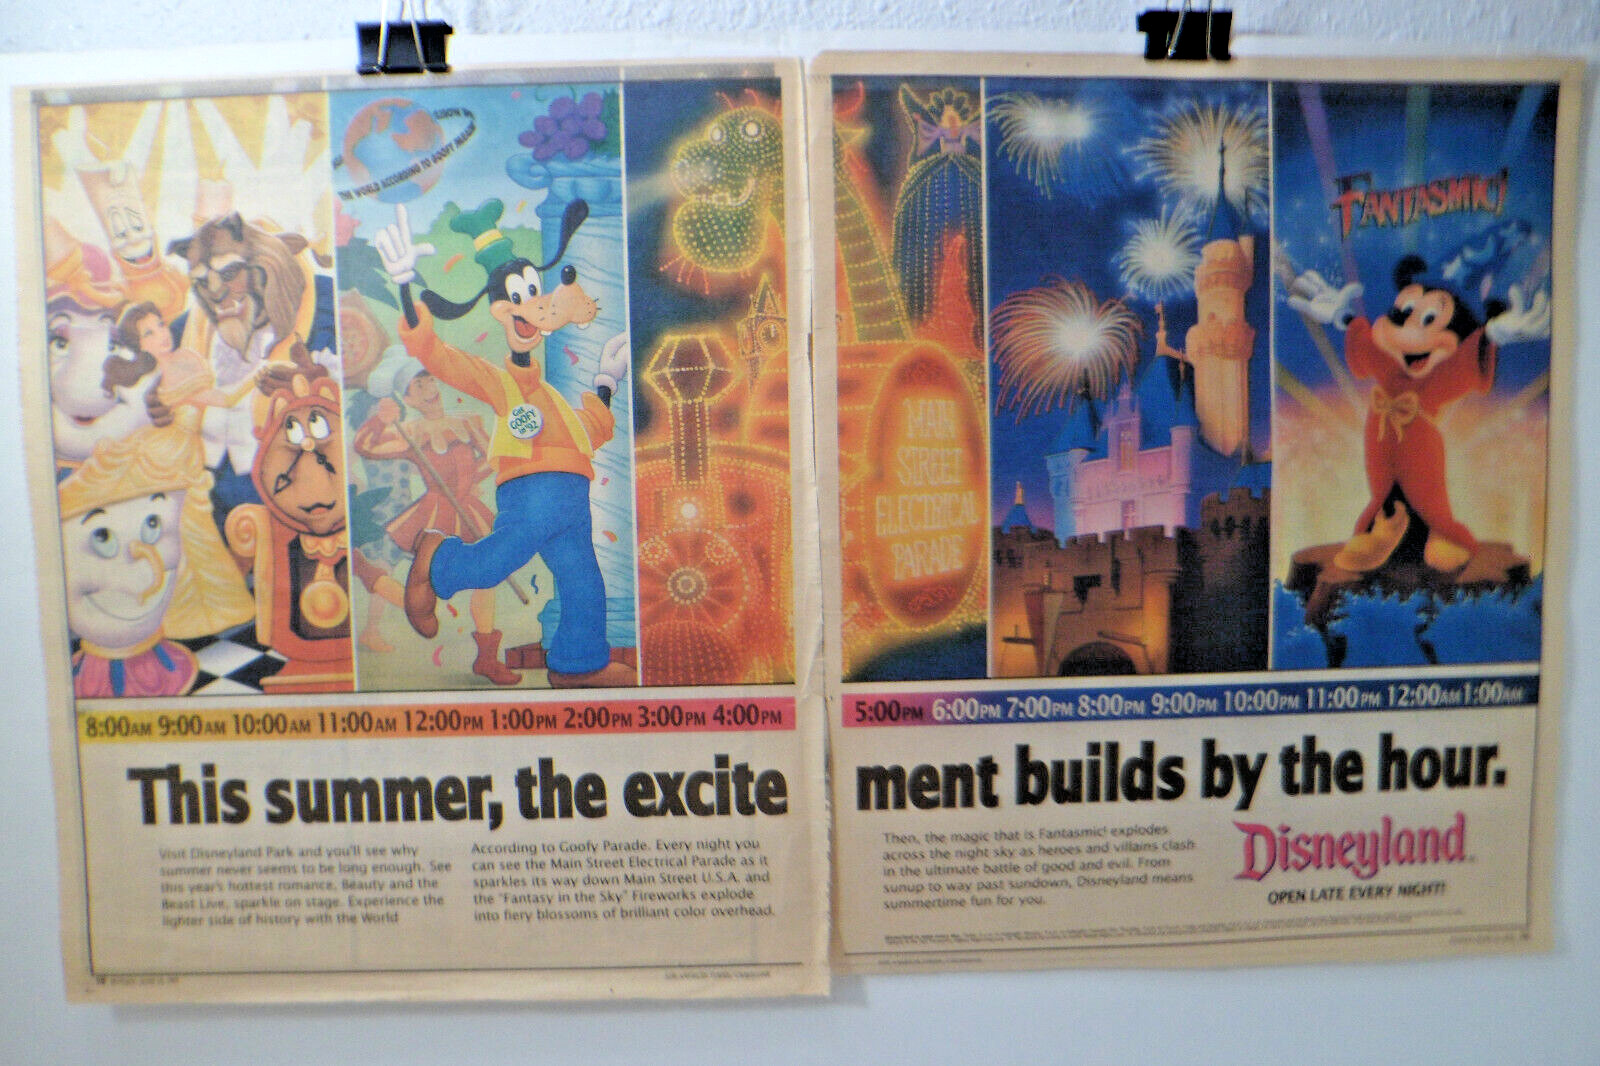 June 14, 1992 FANTASMIC Summer Time at Disneyland -LA Times Newspaper 2-page Ad